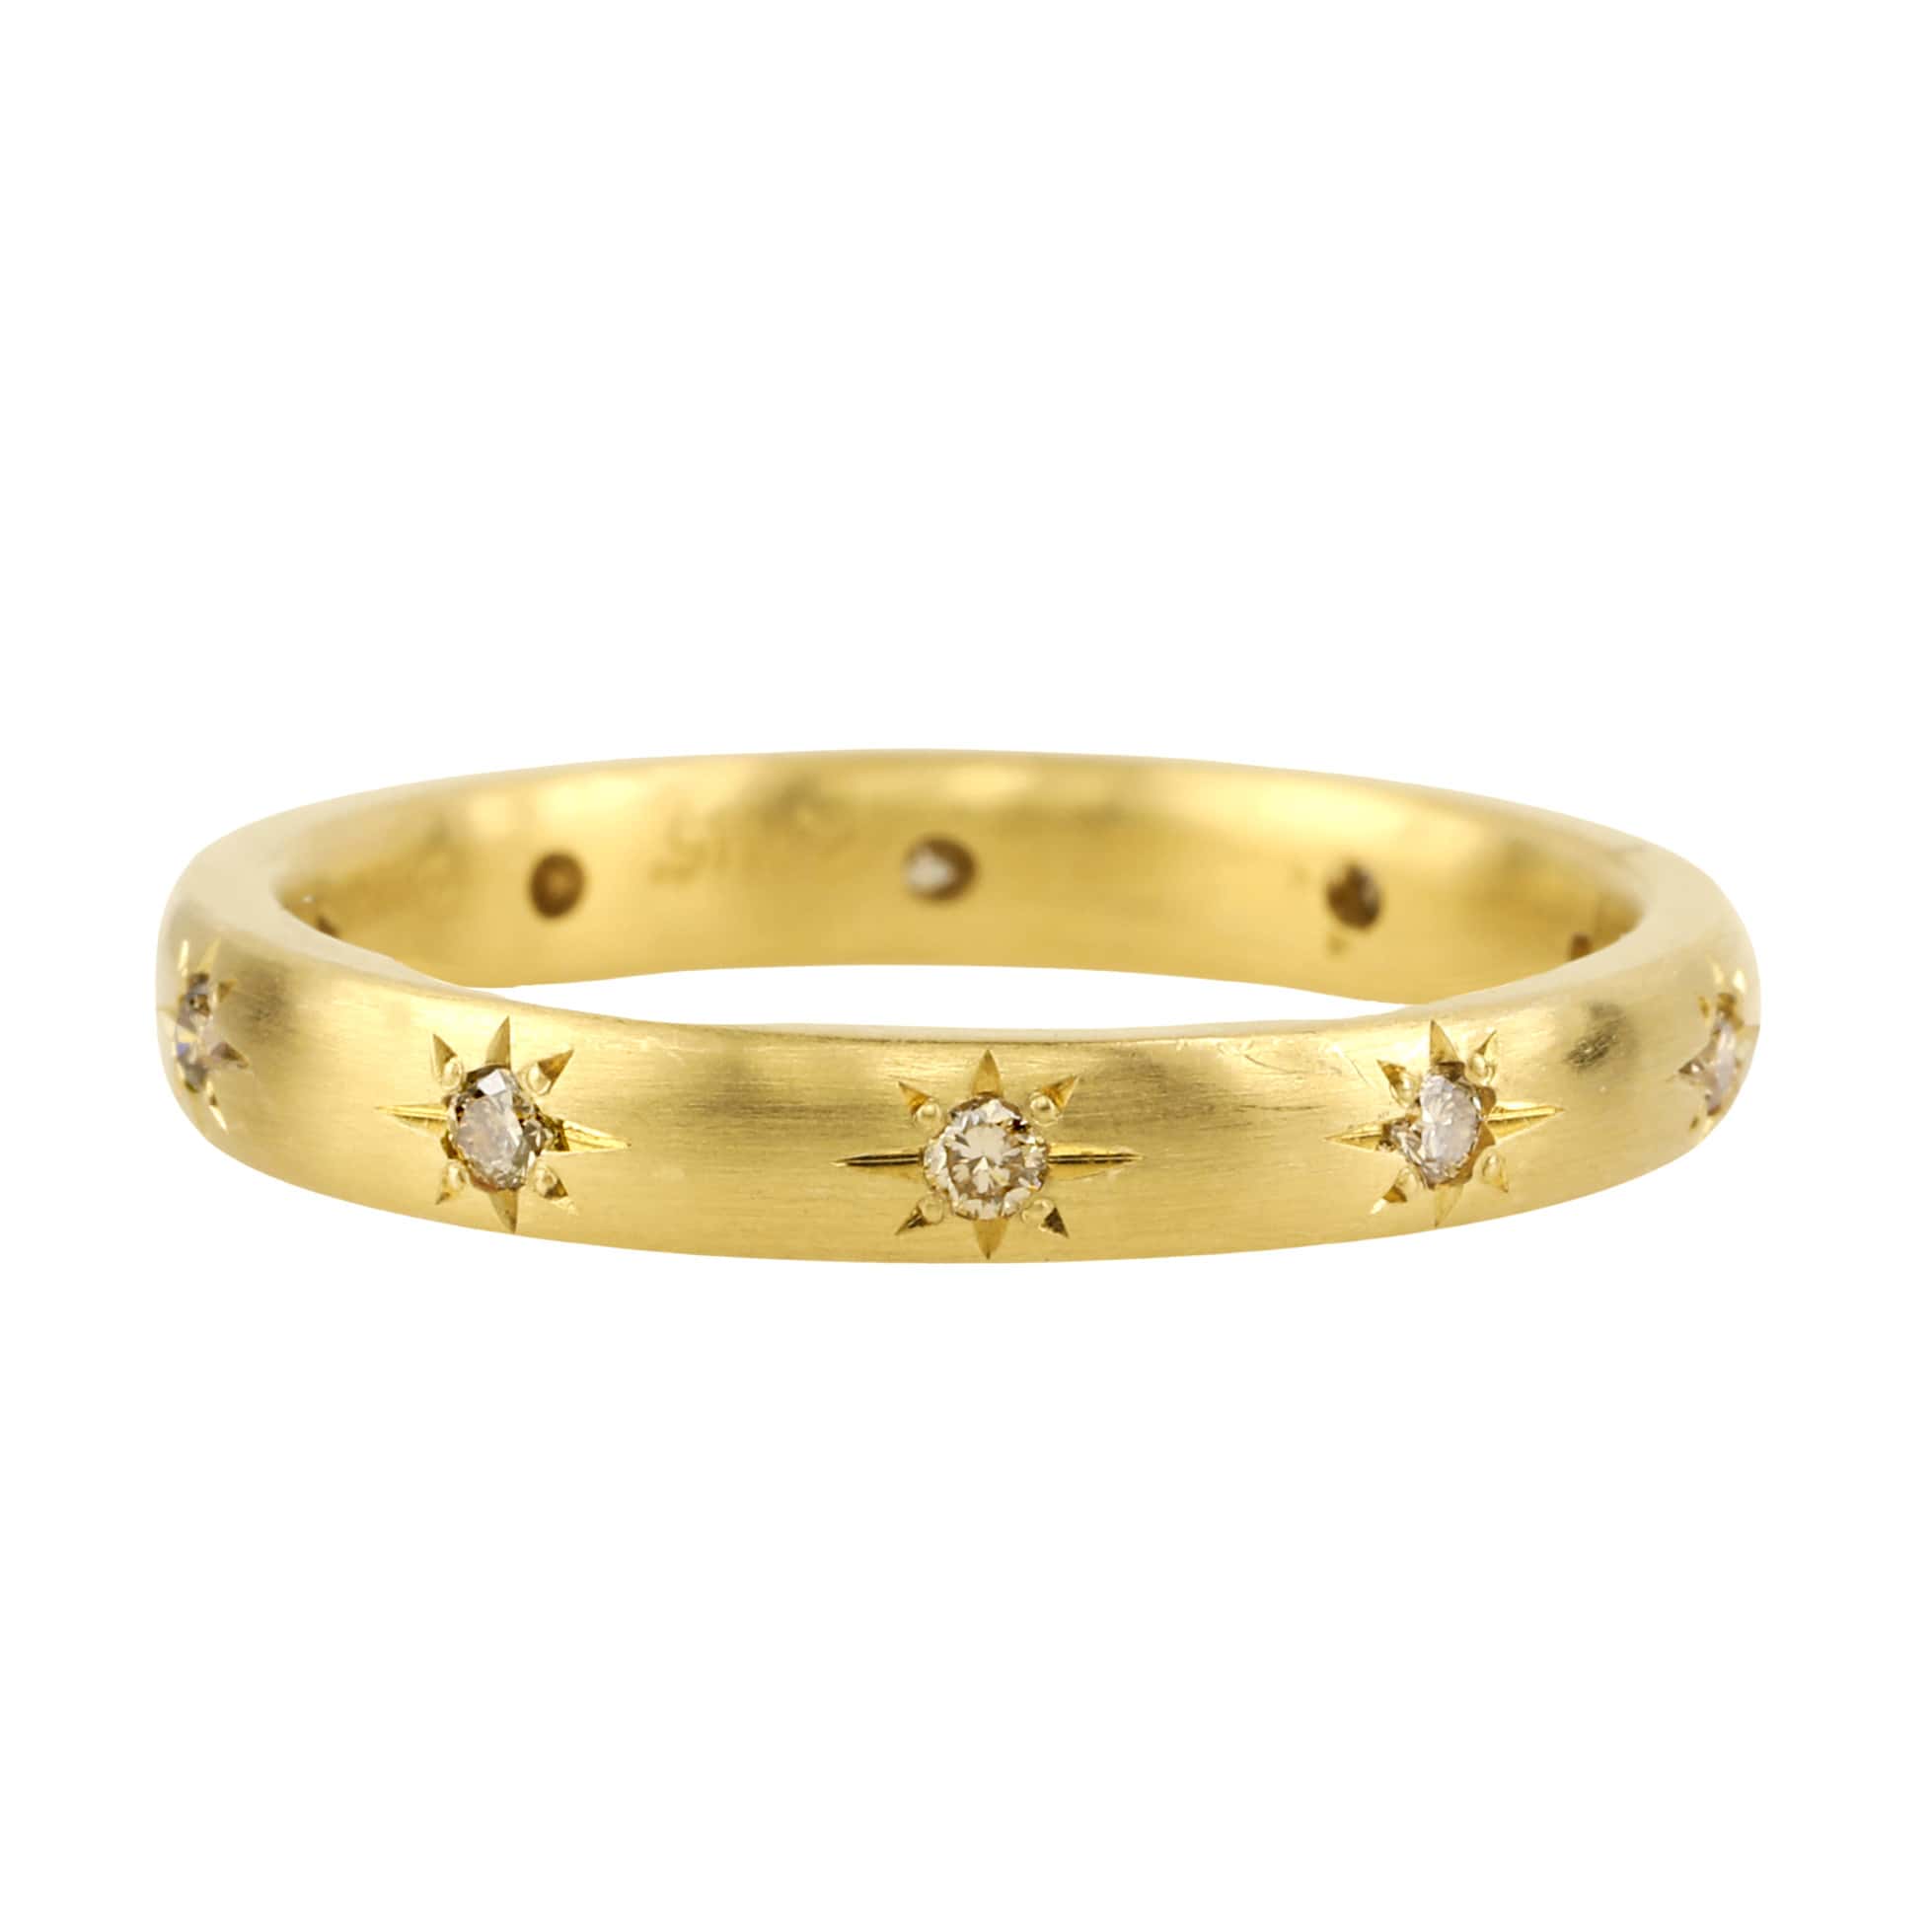 Caroline Ellen 20K Gold Narrow Band Ring with Star-Set Champagne Diamonds